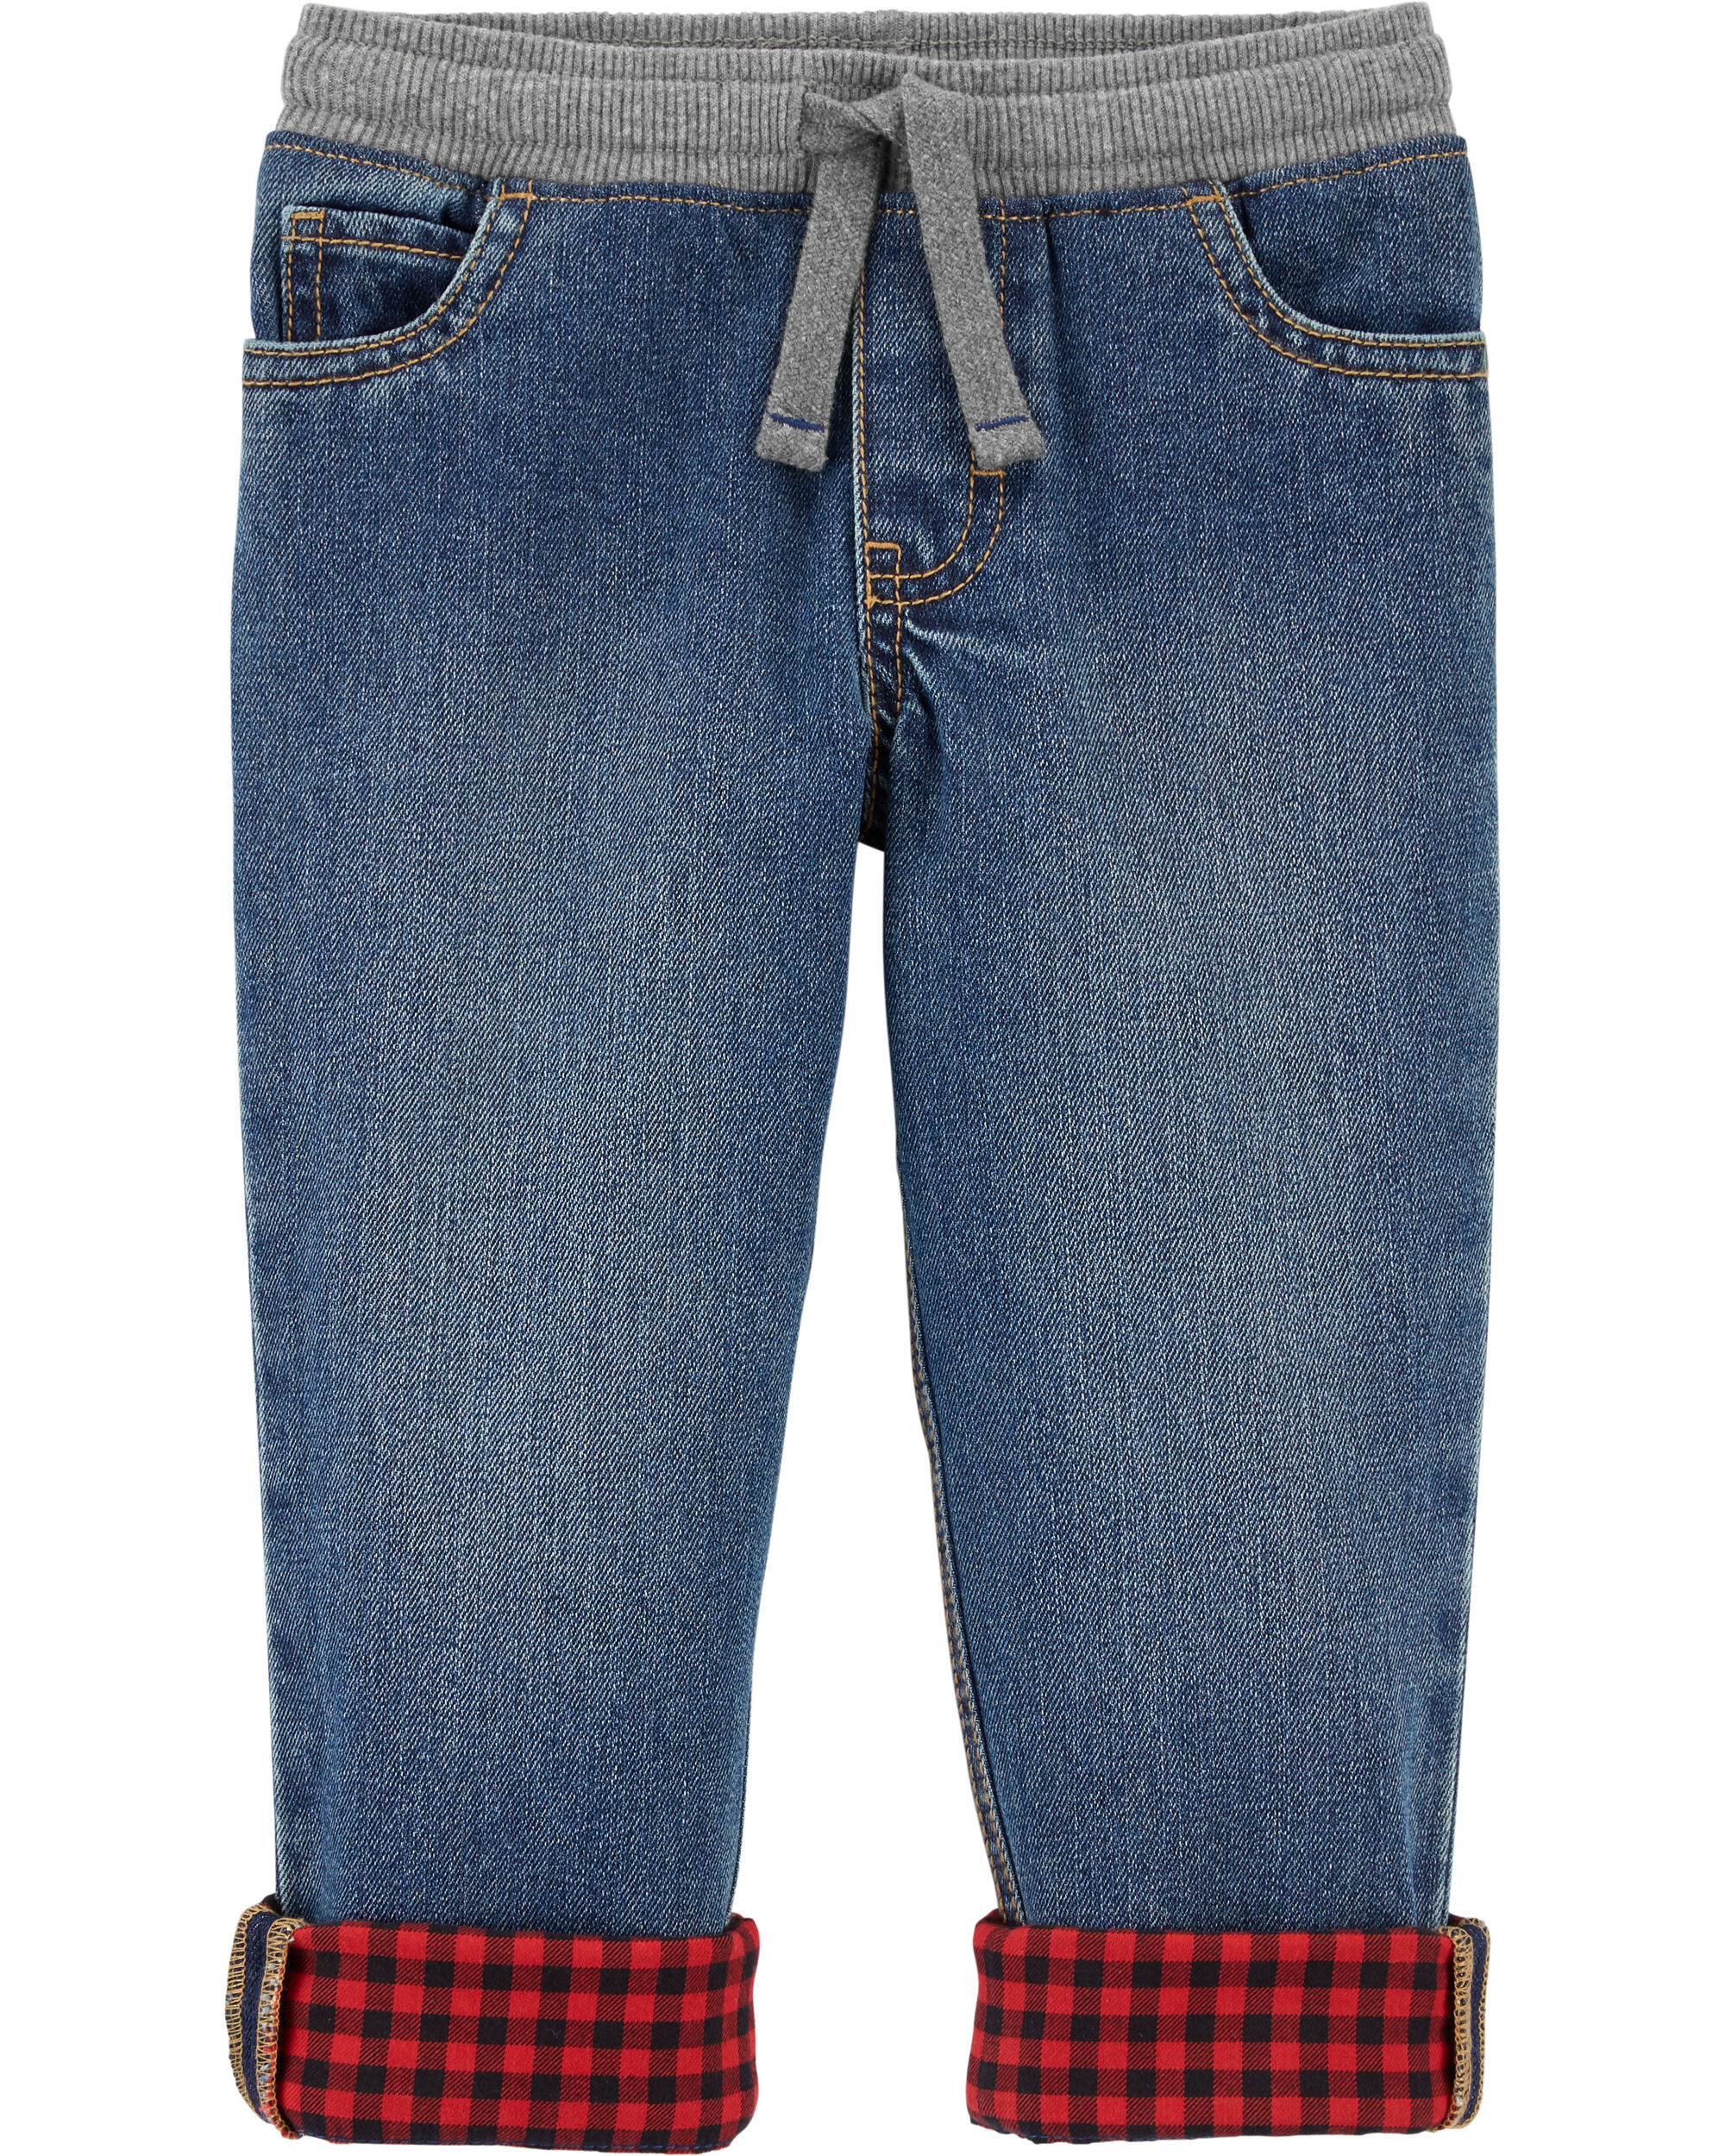 kids flannel lined jeans